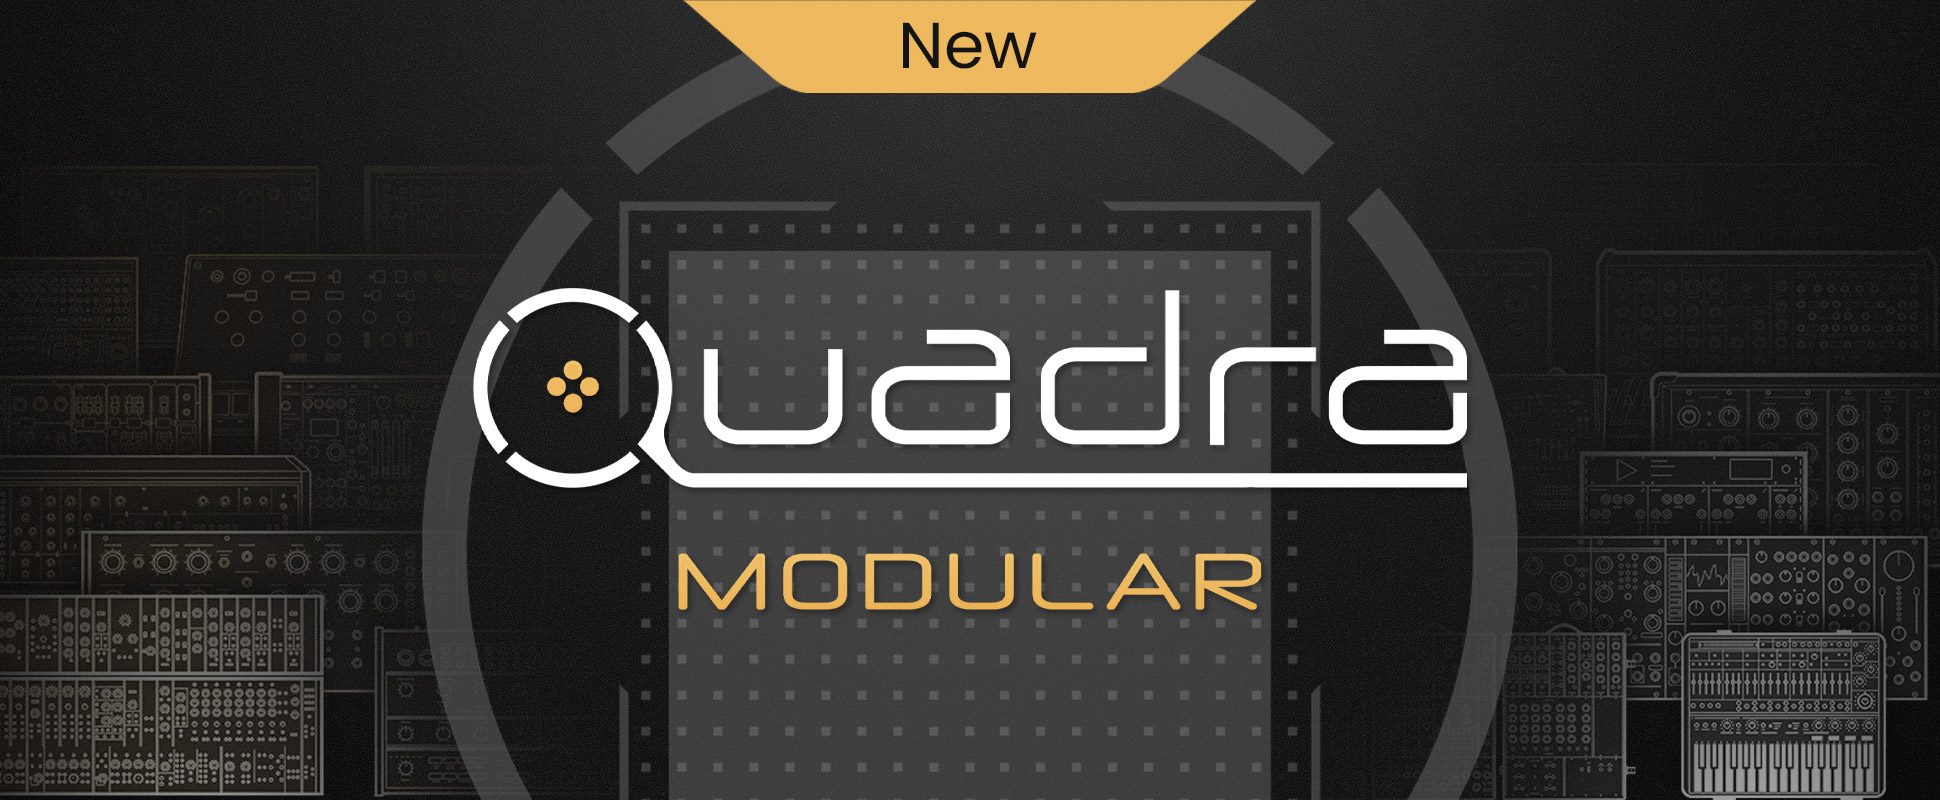 Quadra Modular - New